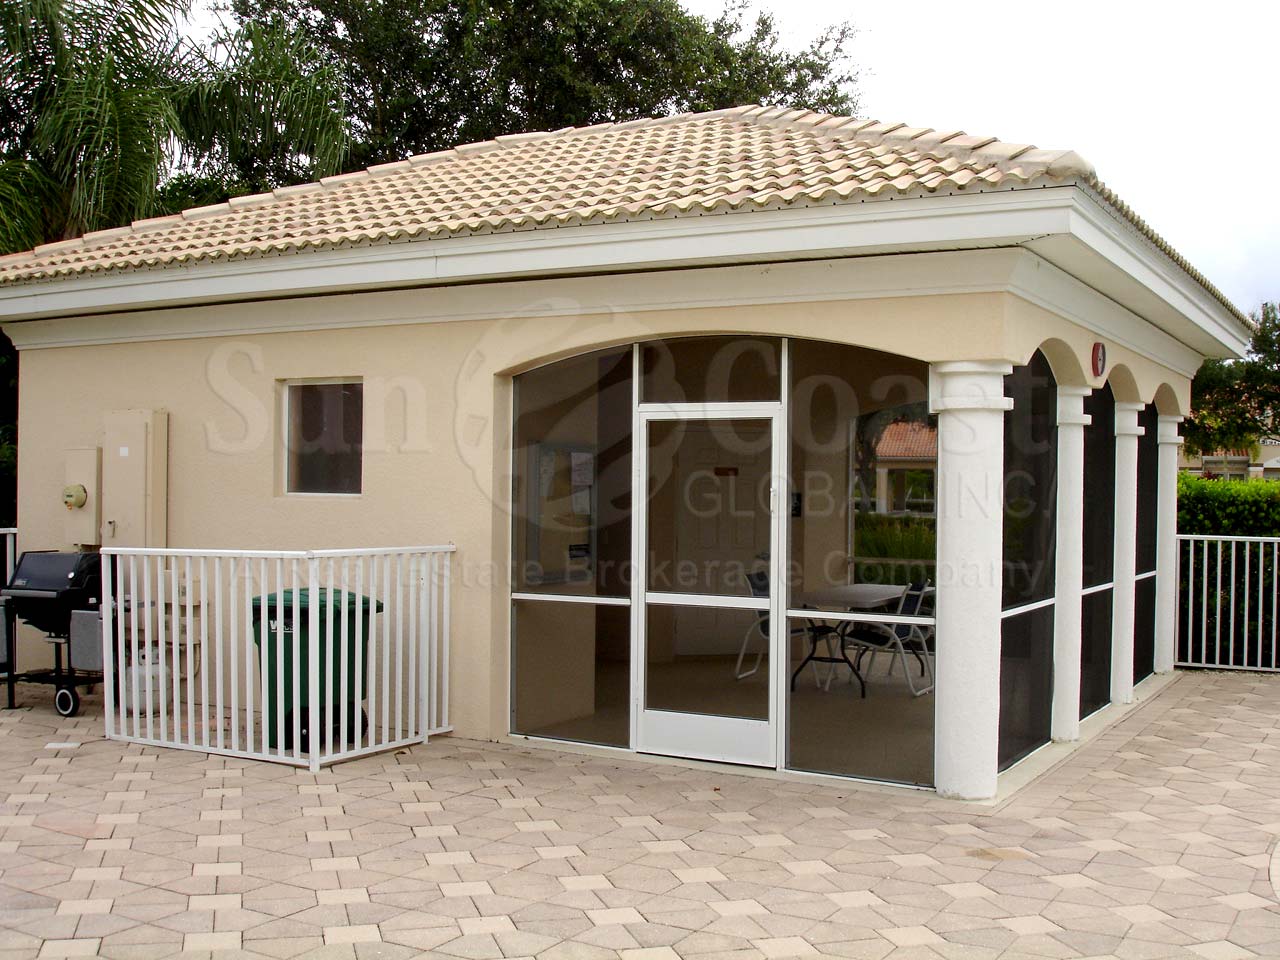 Juliana Village screen enclosed cabana area with restrooms.